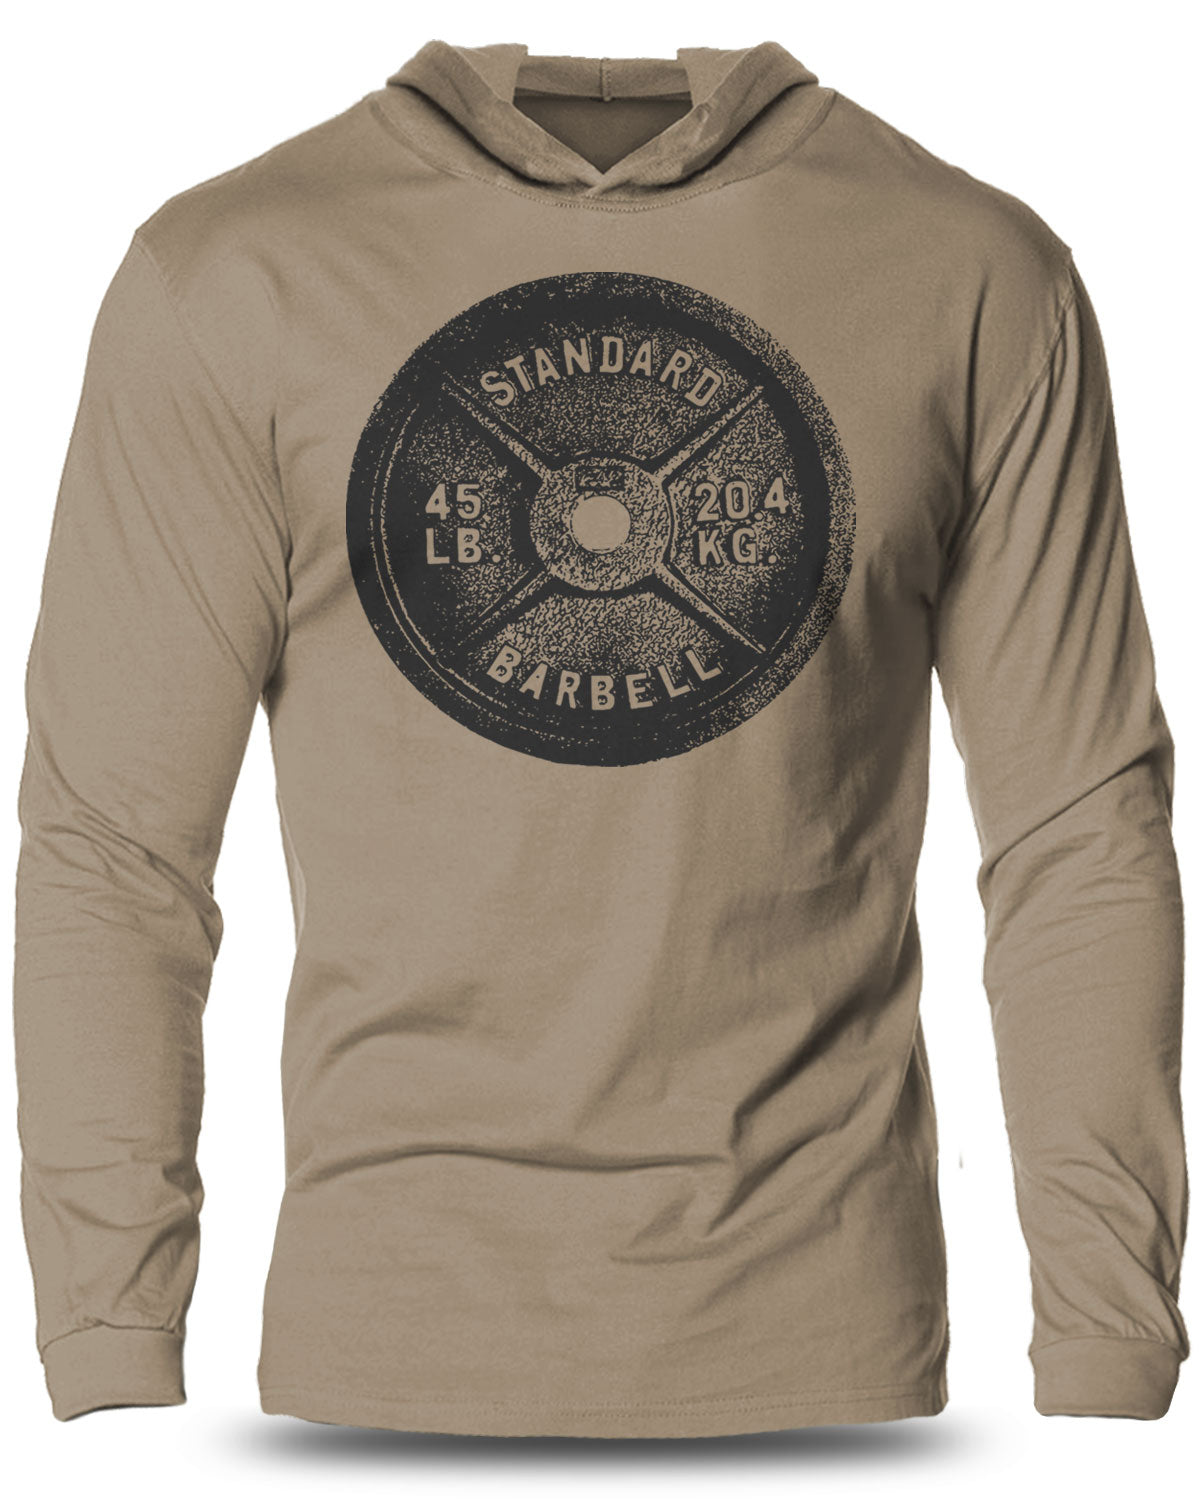 001-Squat Bench Deadlift Lightweight Long Sleeve Hooded T-shirt for Men